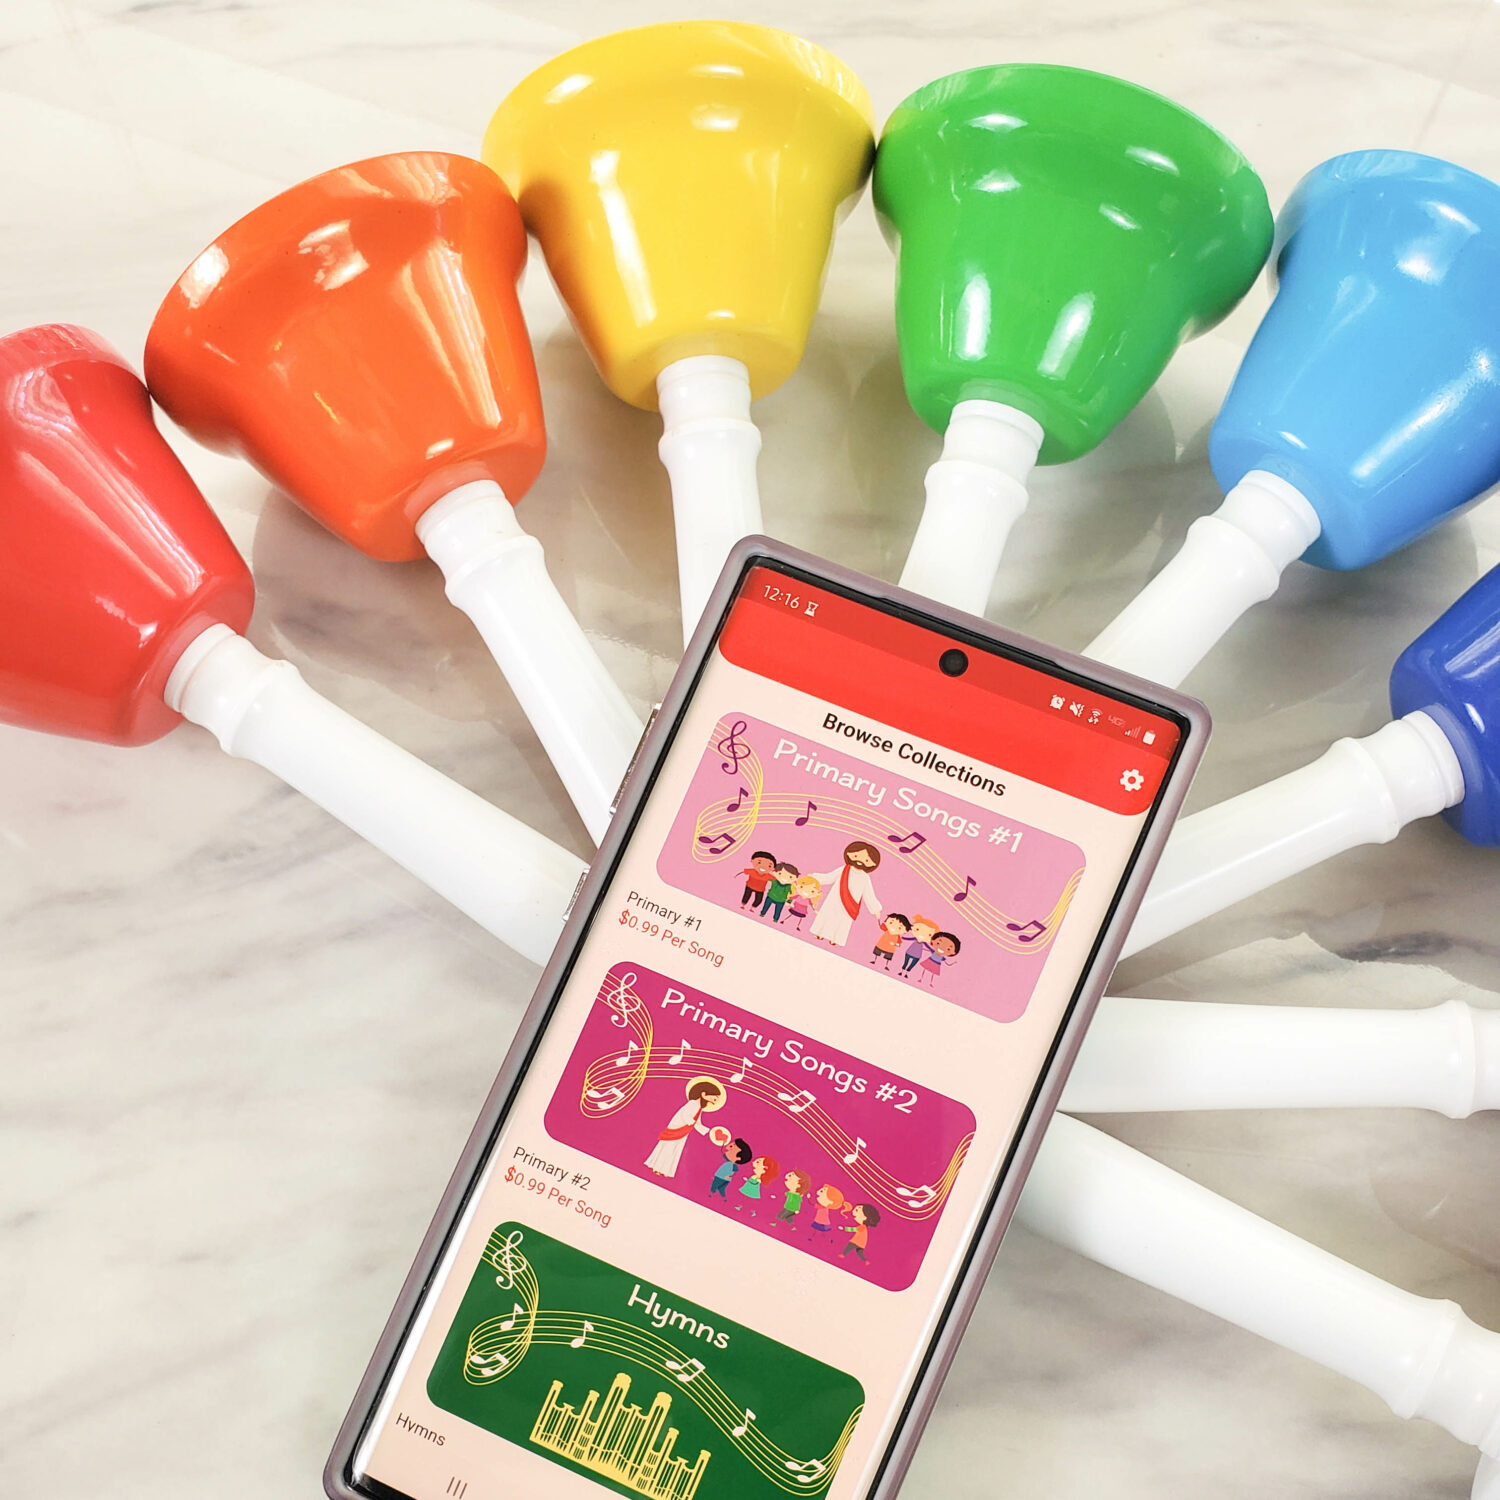 Merry Bells App: Primary Song Downloads! Easy ideas for Music Leaders Merry Bells App1 2